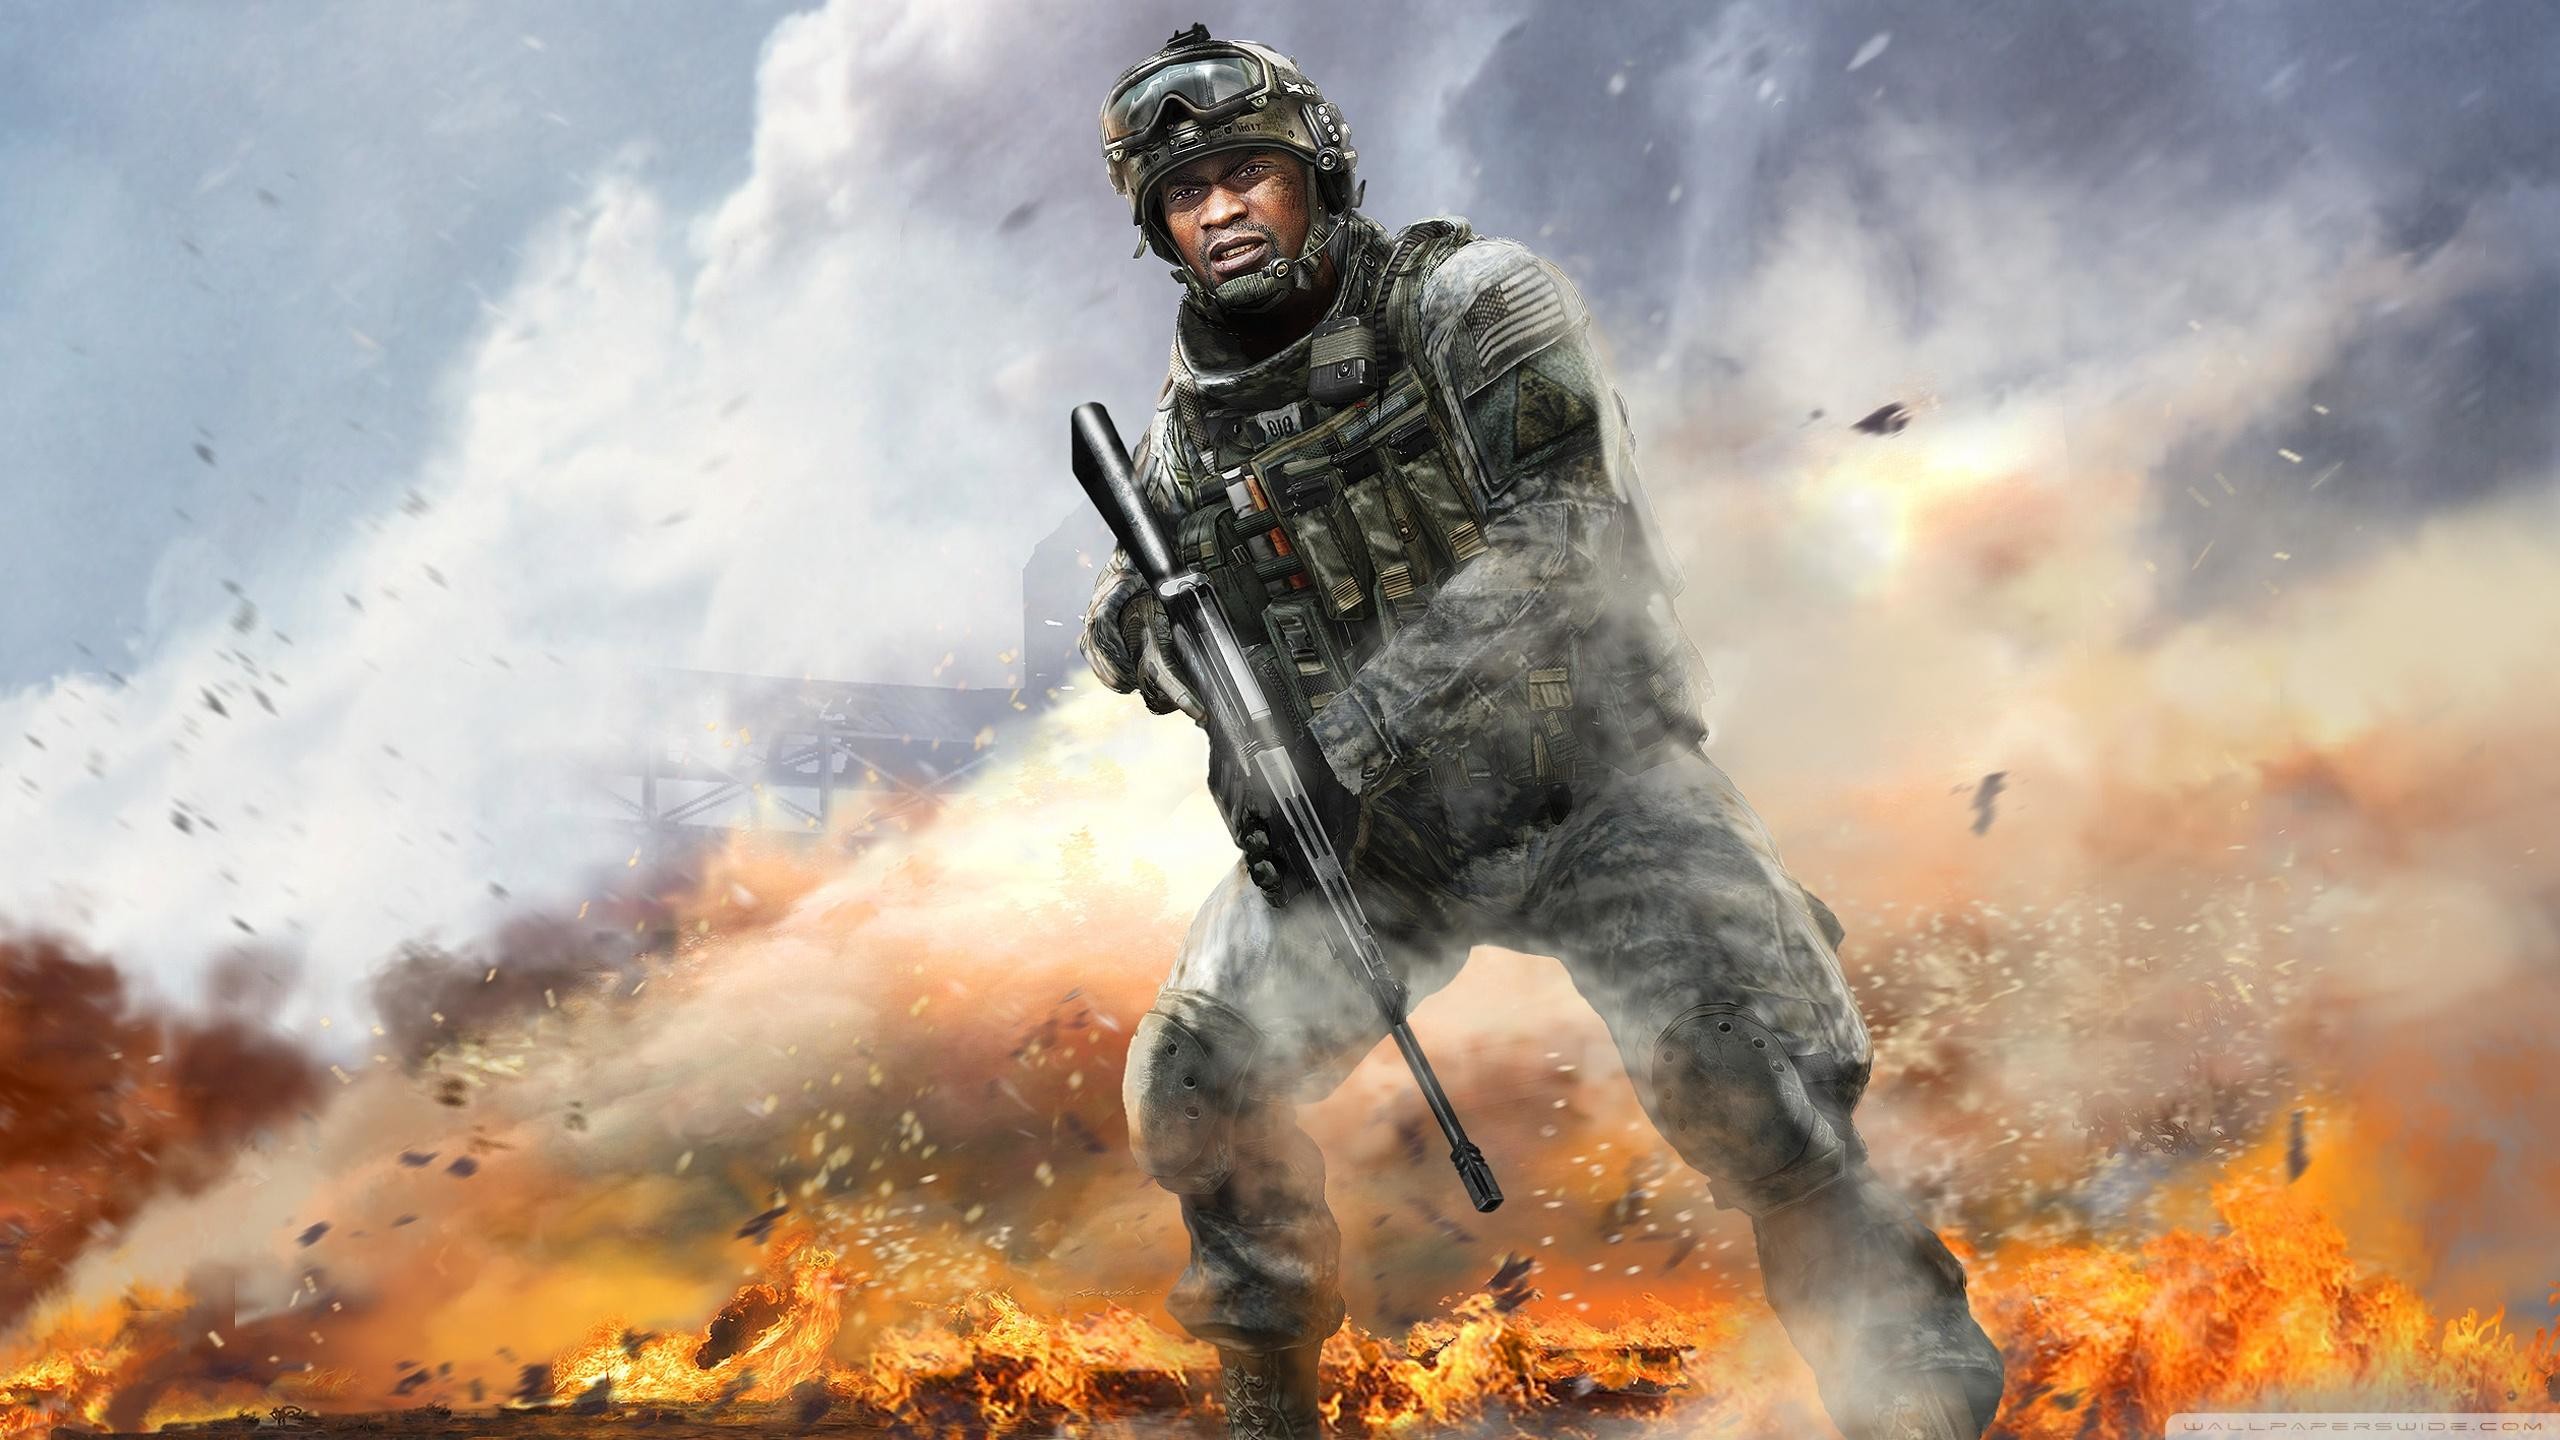 Modern Warfare 2 Background